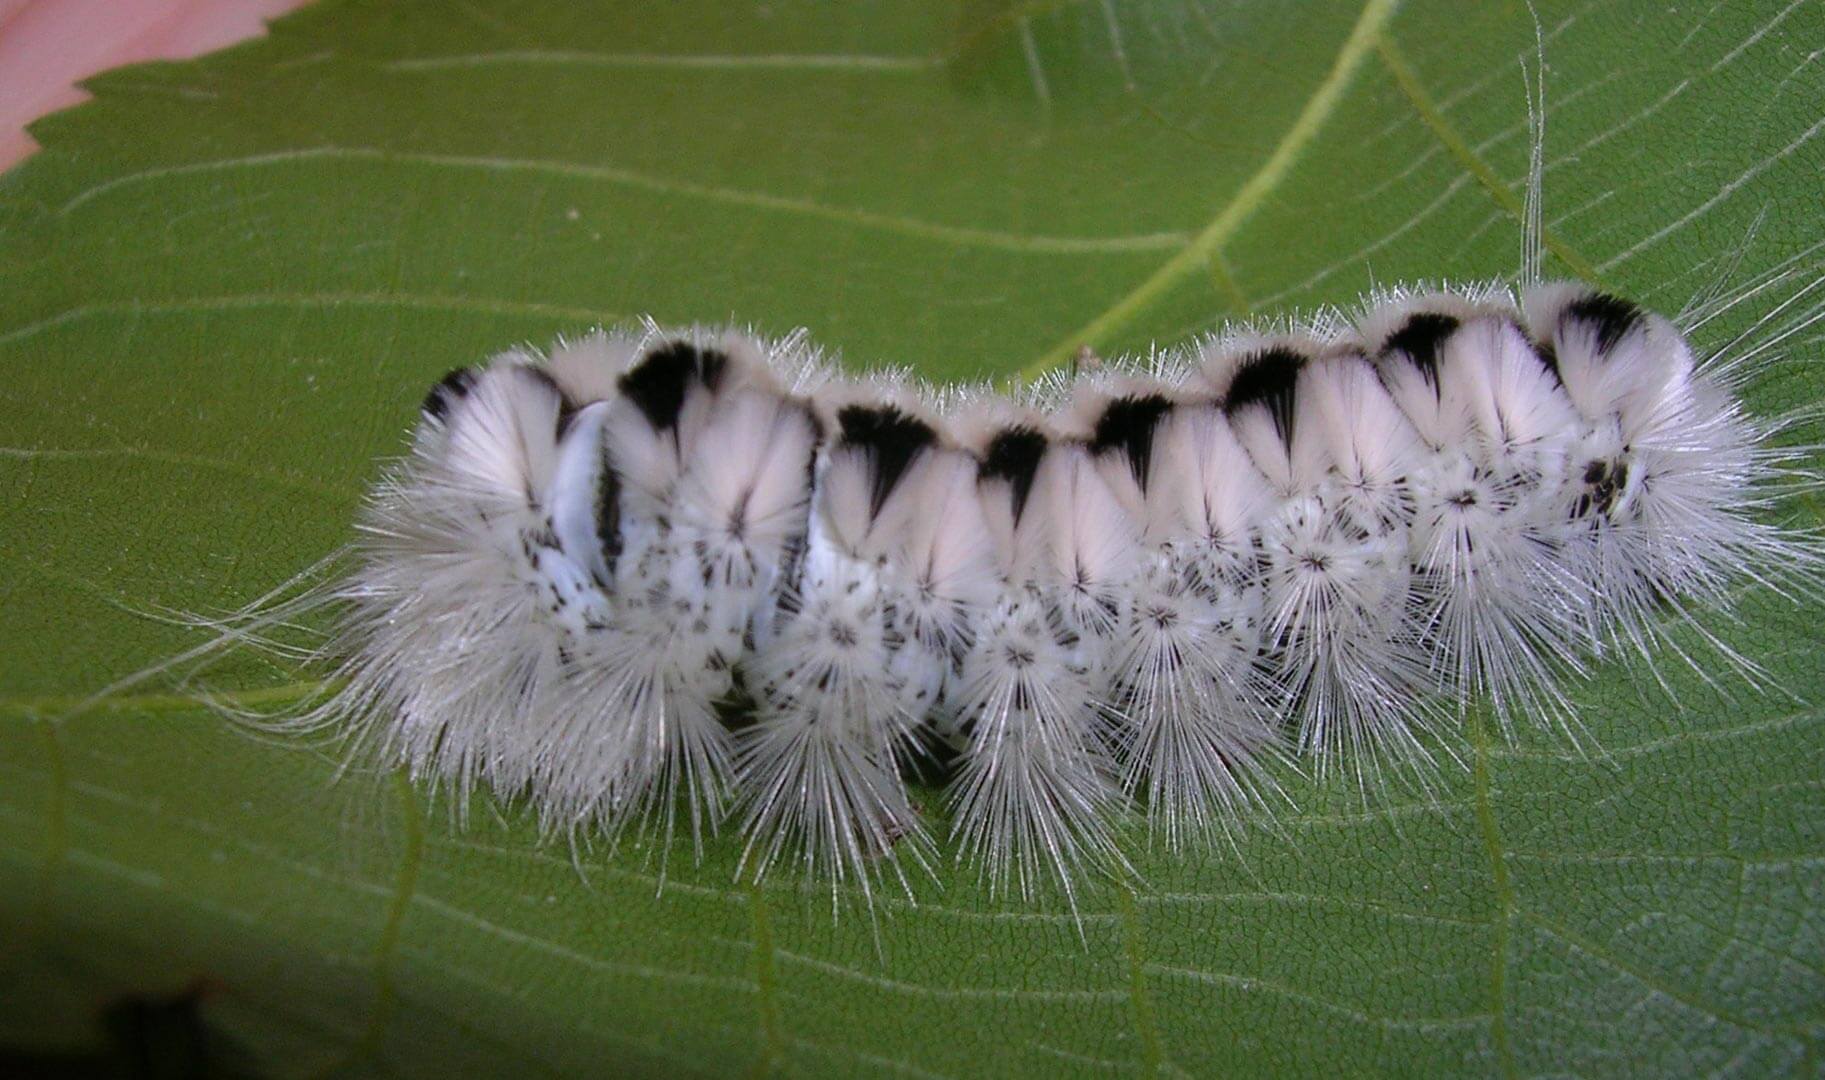 Hickory Tussock Caterpillar